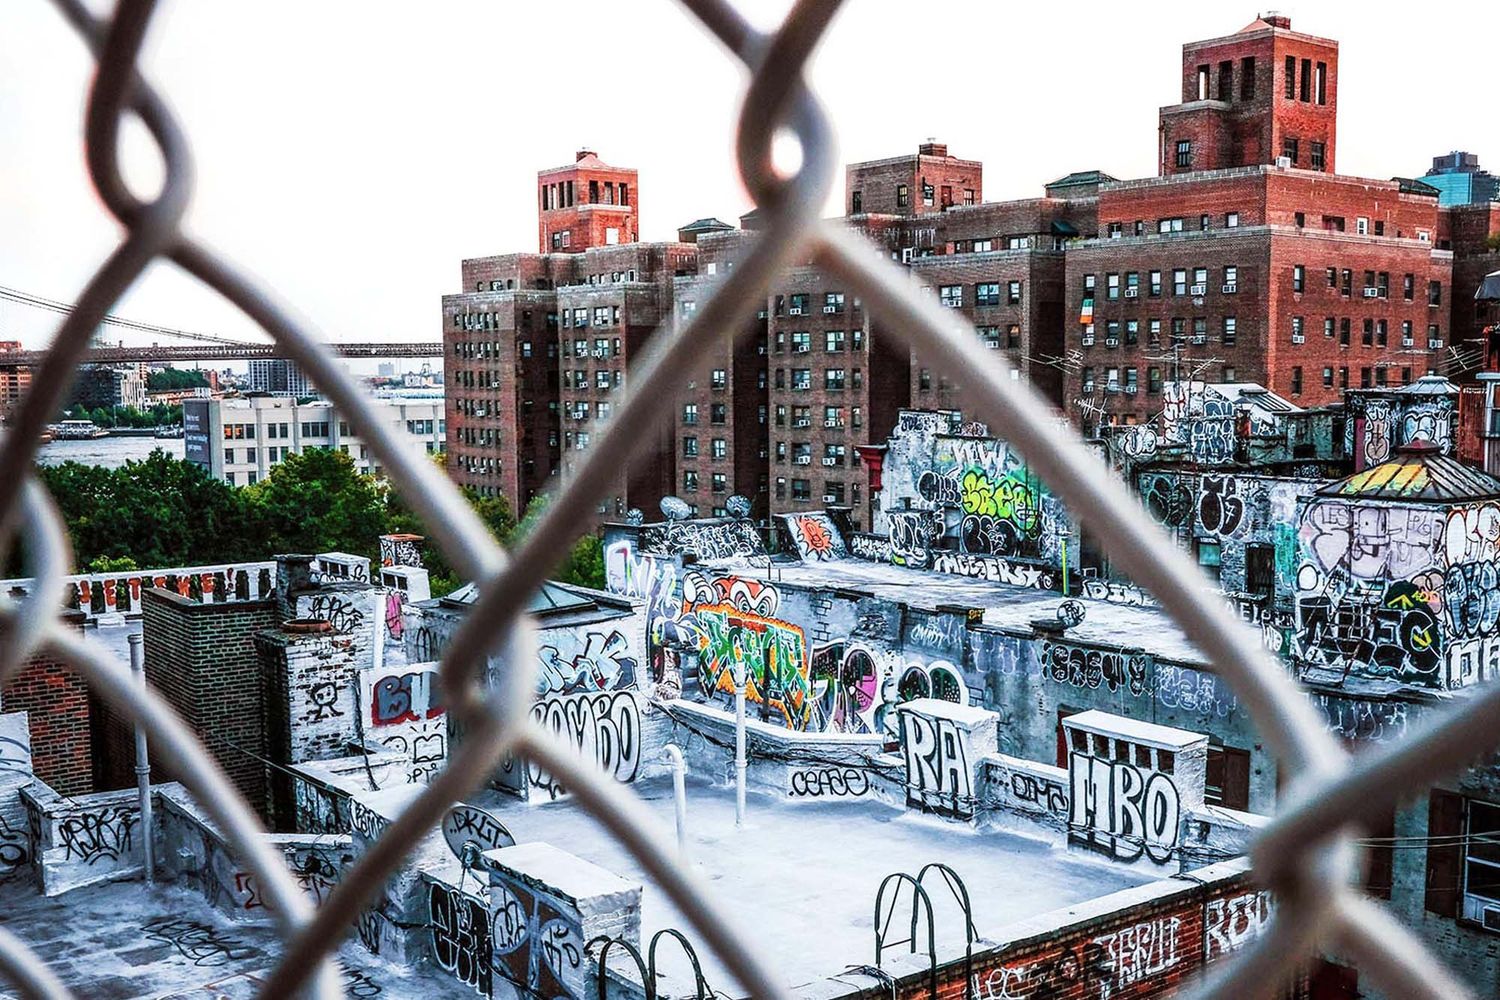 A brief history of Urban Art, from Graffiti to Street Art (2/3)